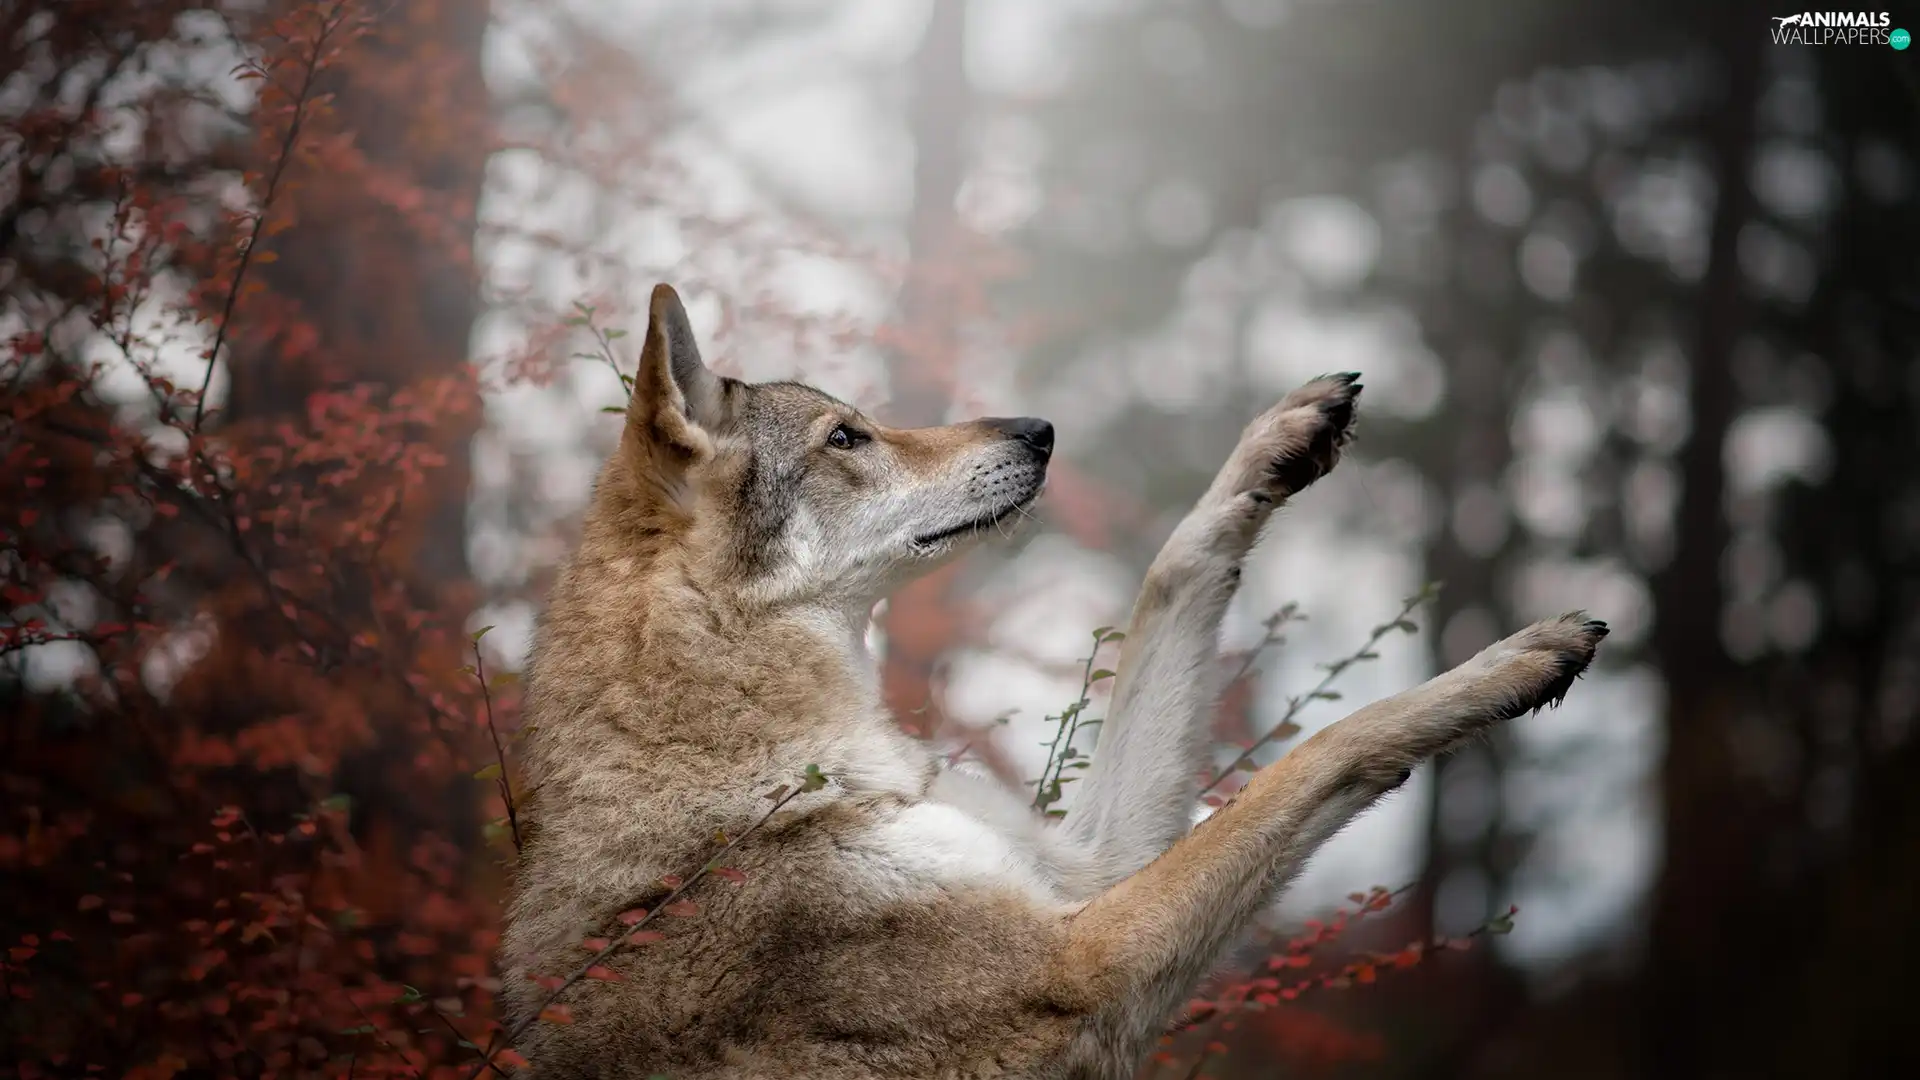 Czechoslovakian Wolfdog, dog, muzzle, paws, Bush, leaves, trees, viewes, forest